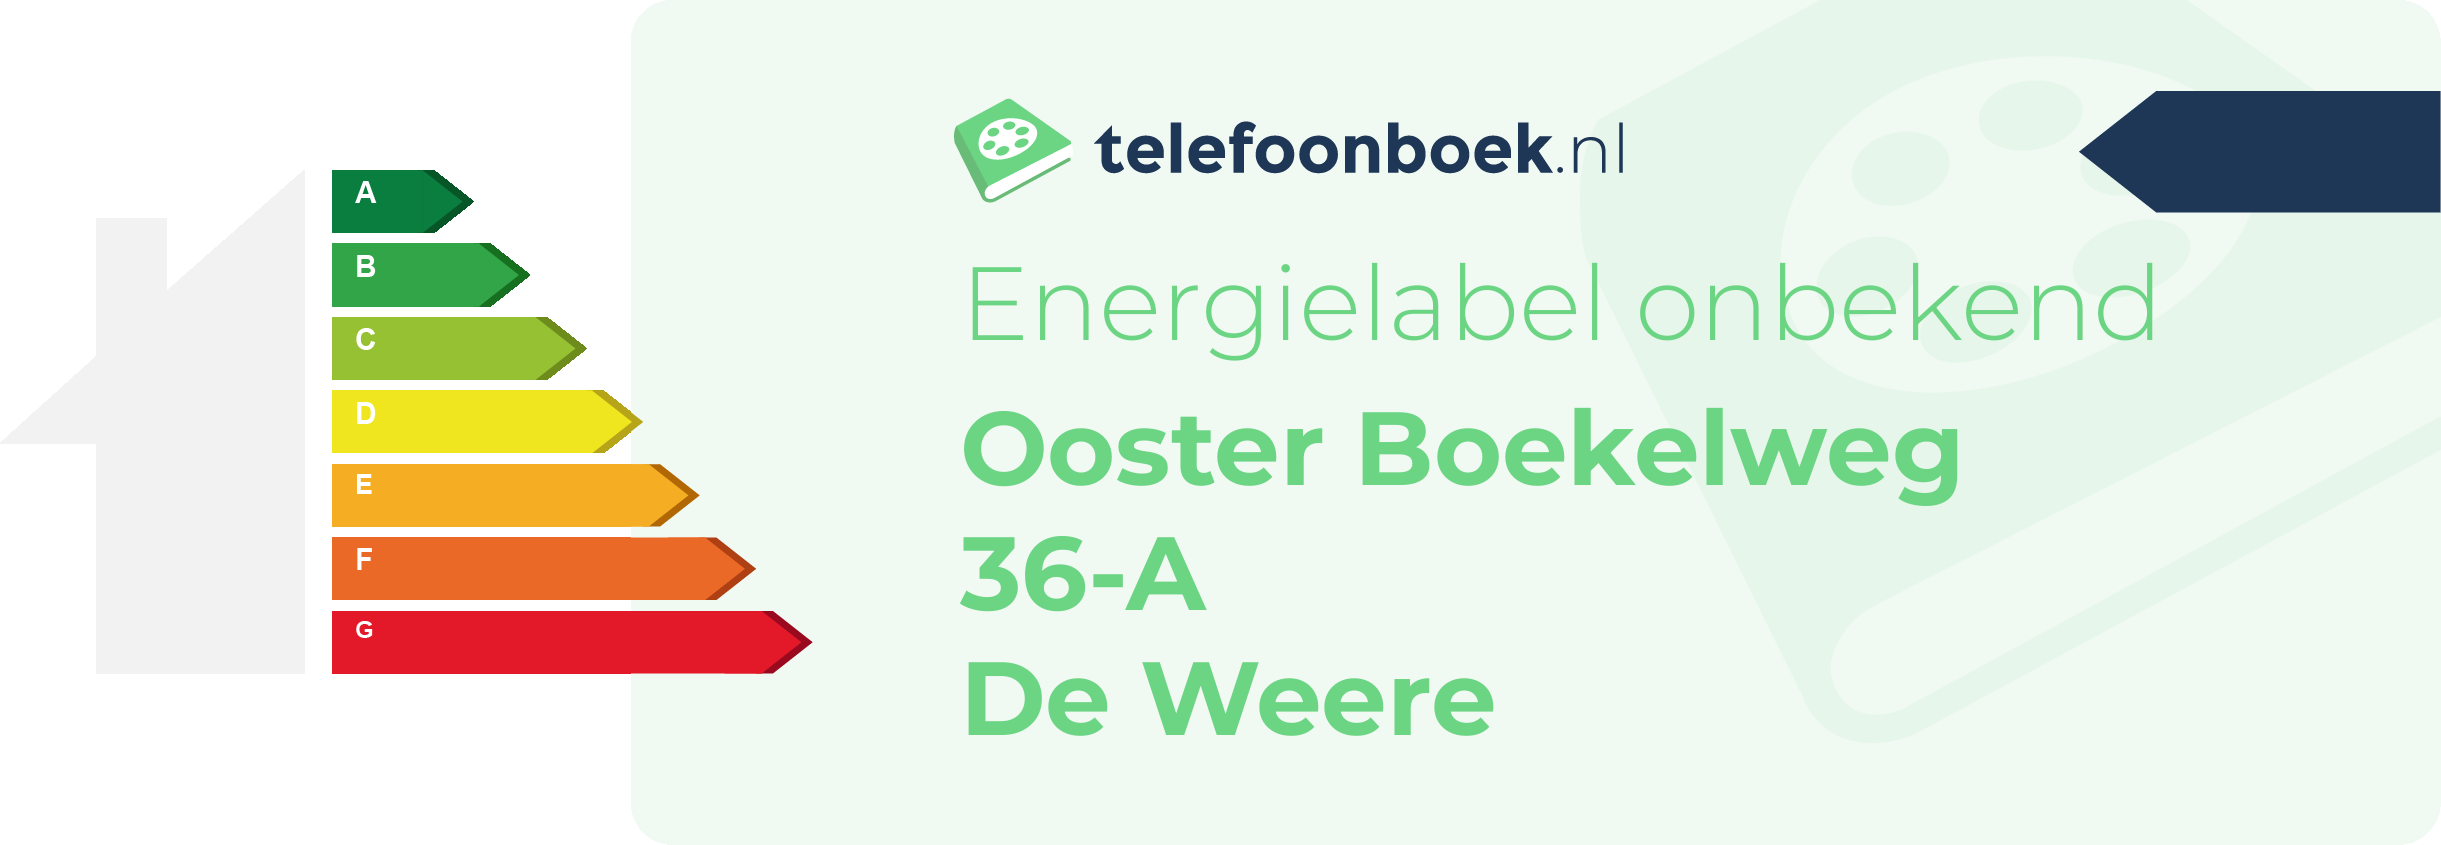 Energielabel Ooster Boekelweg 36-A De Weere